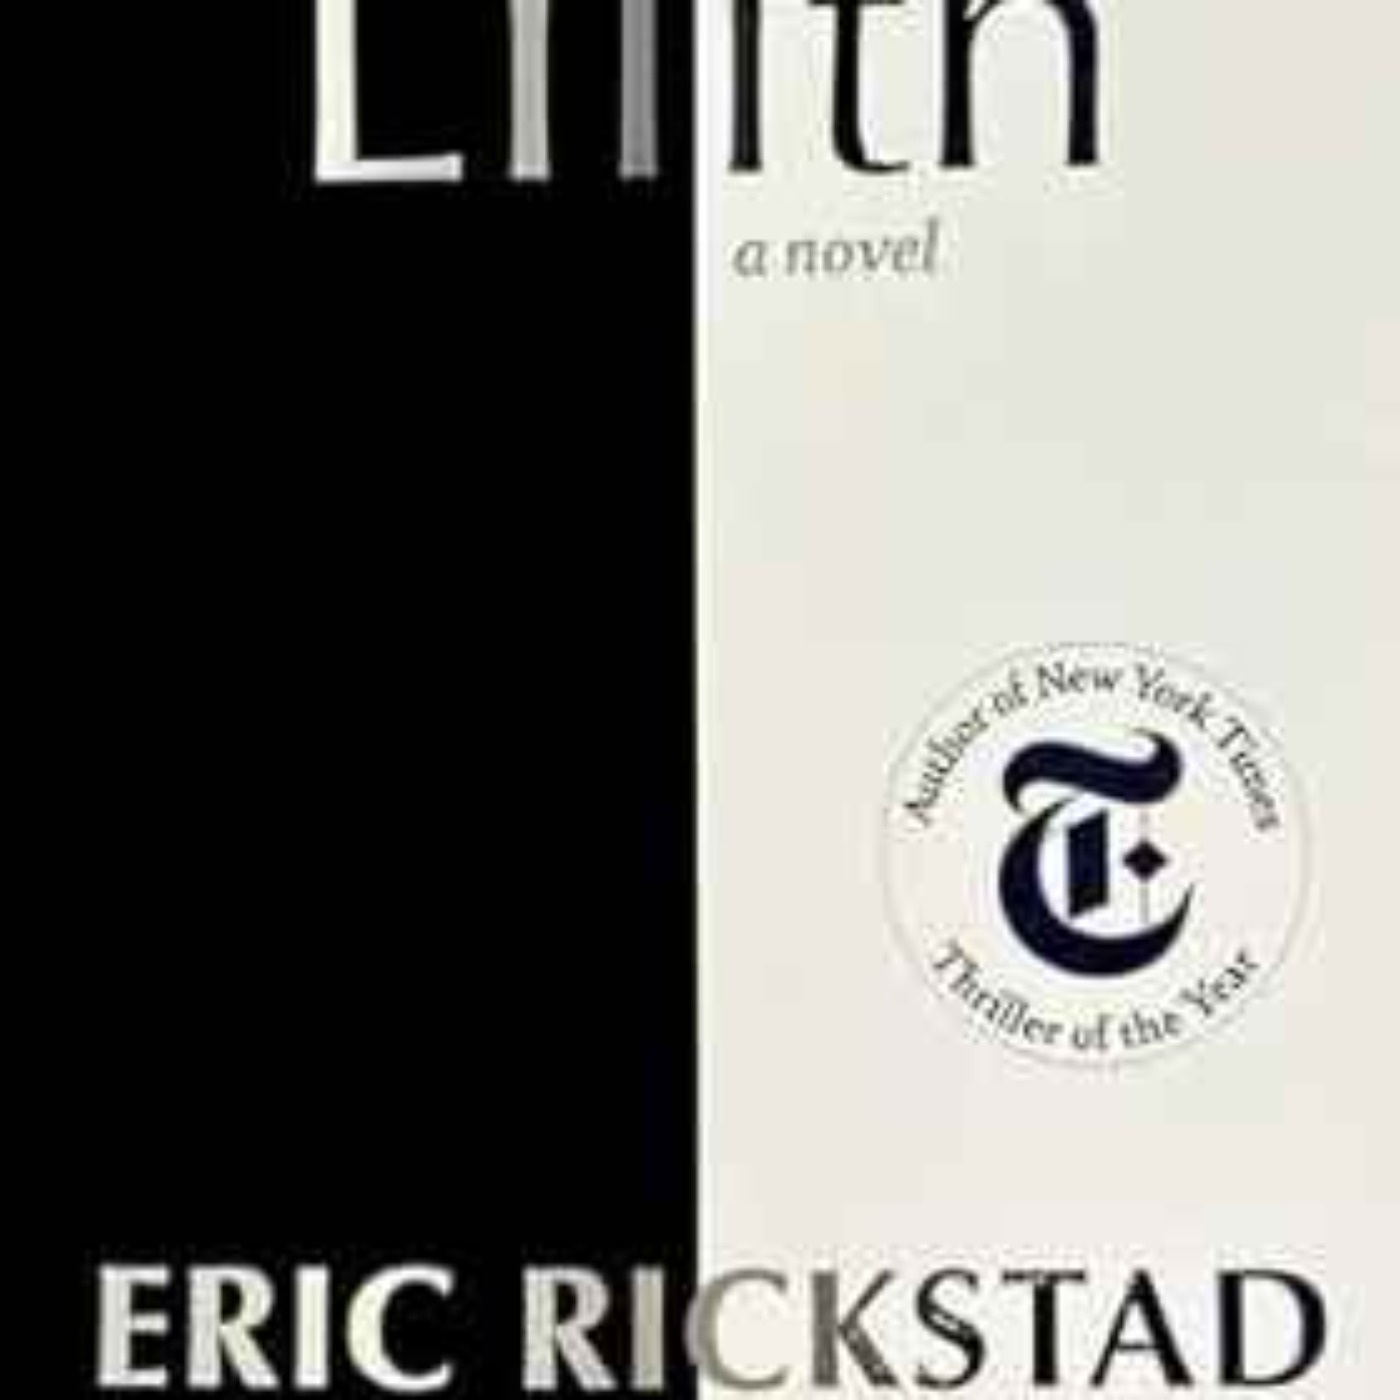 Eric Rickstad -  Lilith